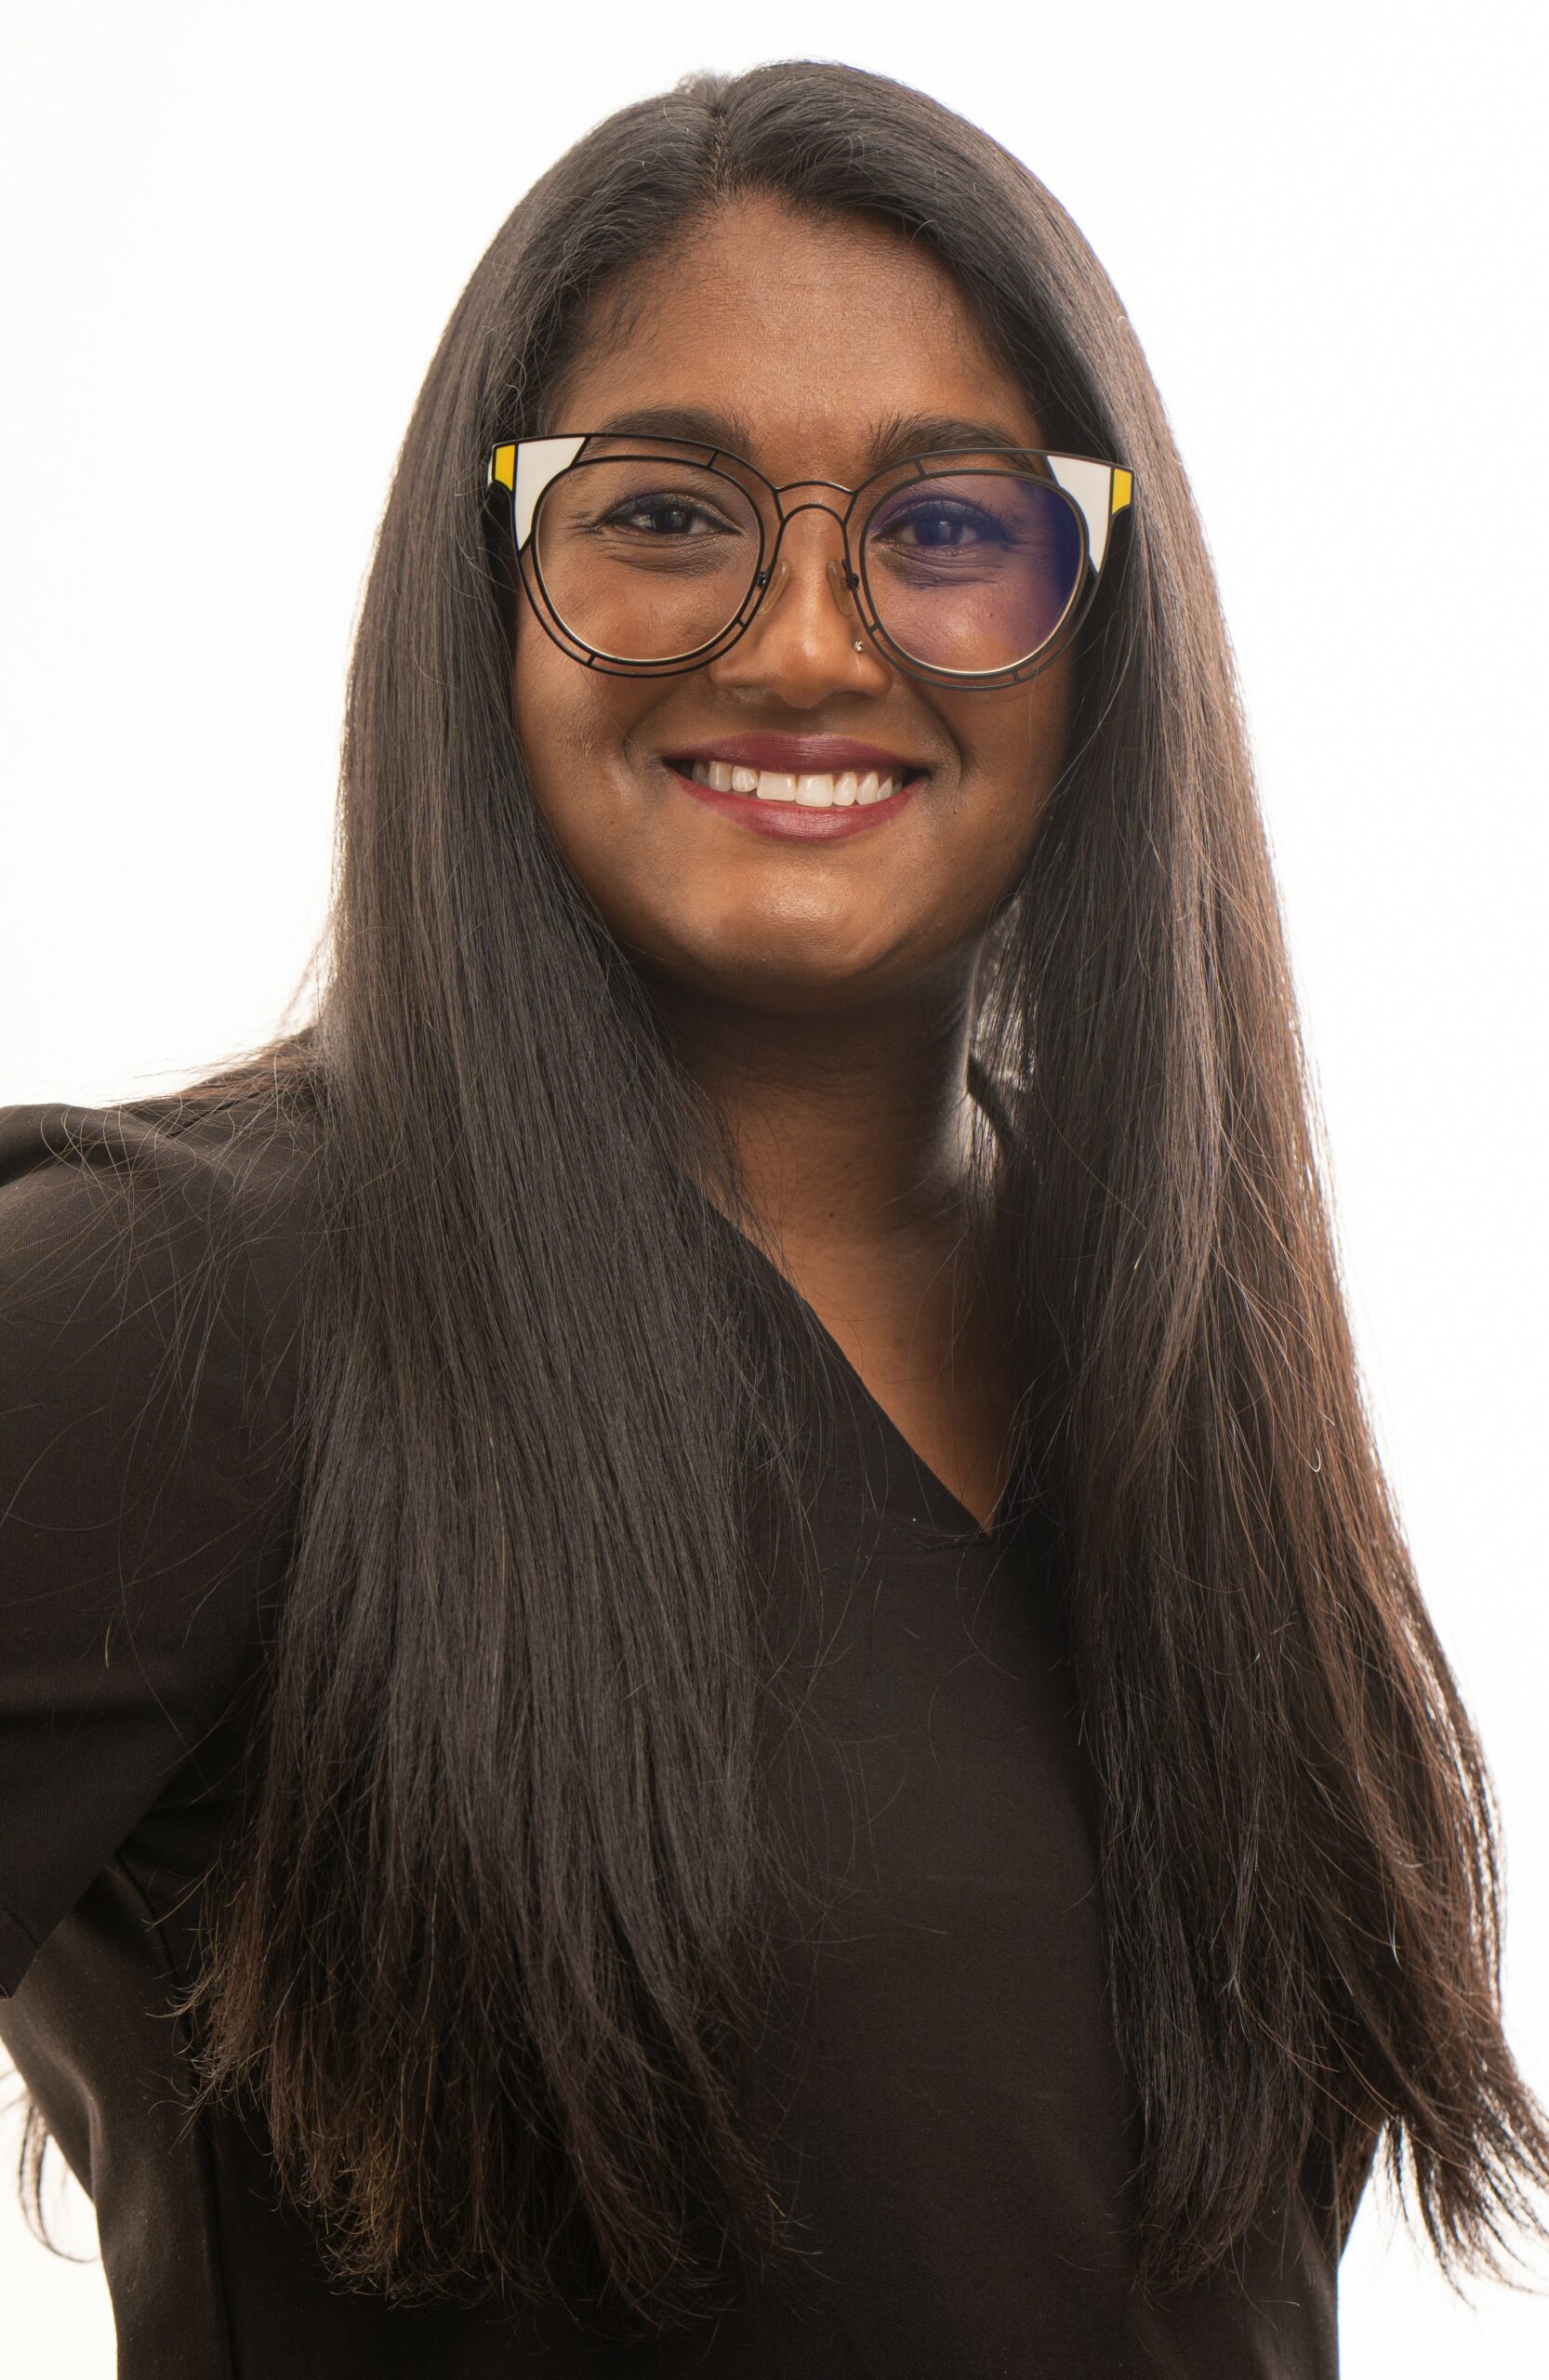 Sathi Maiti in dark top and fashionable eyewear, a new member of the WO advisory board